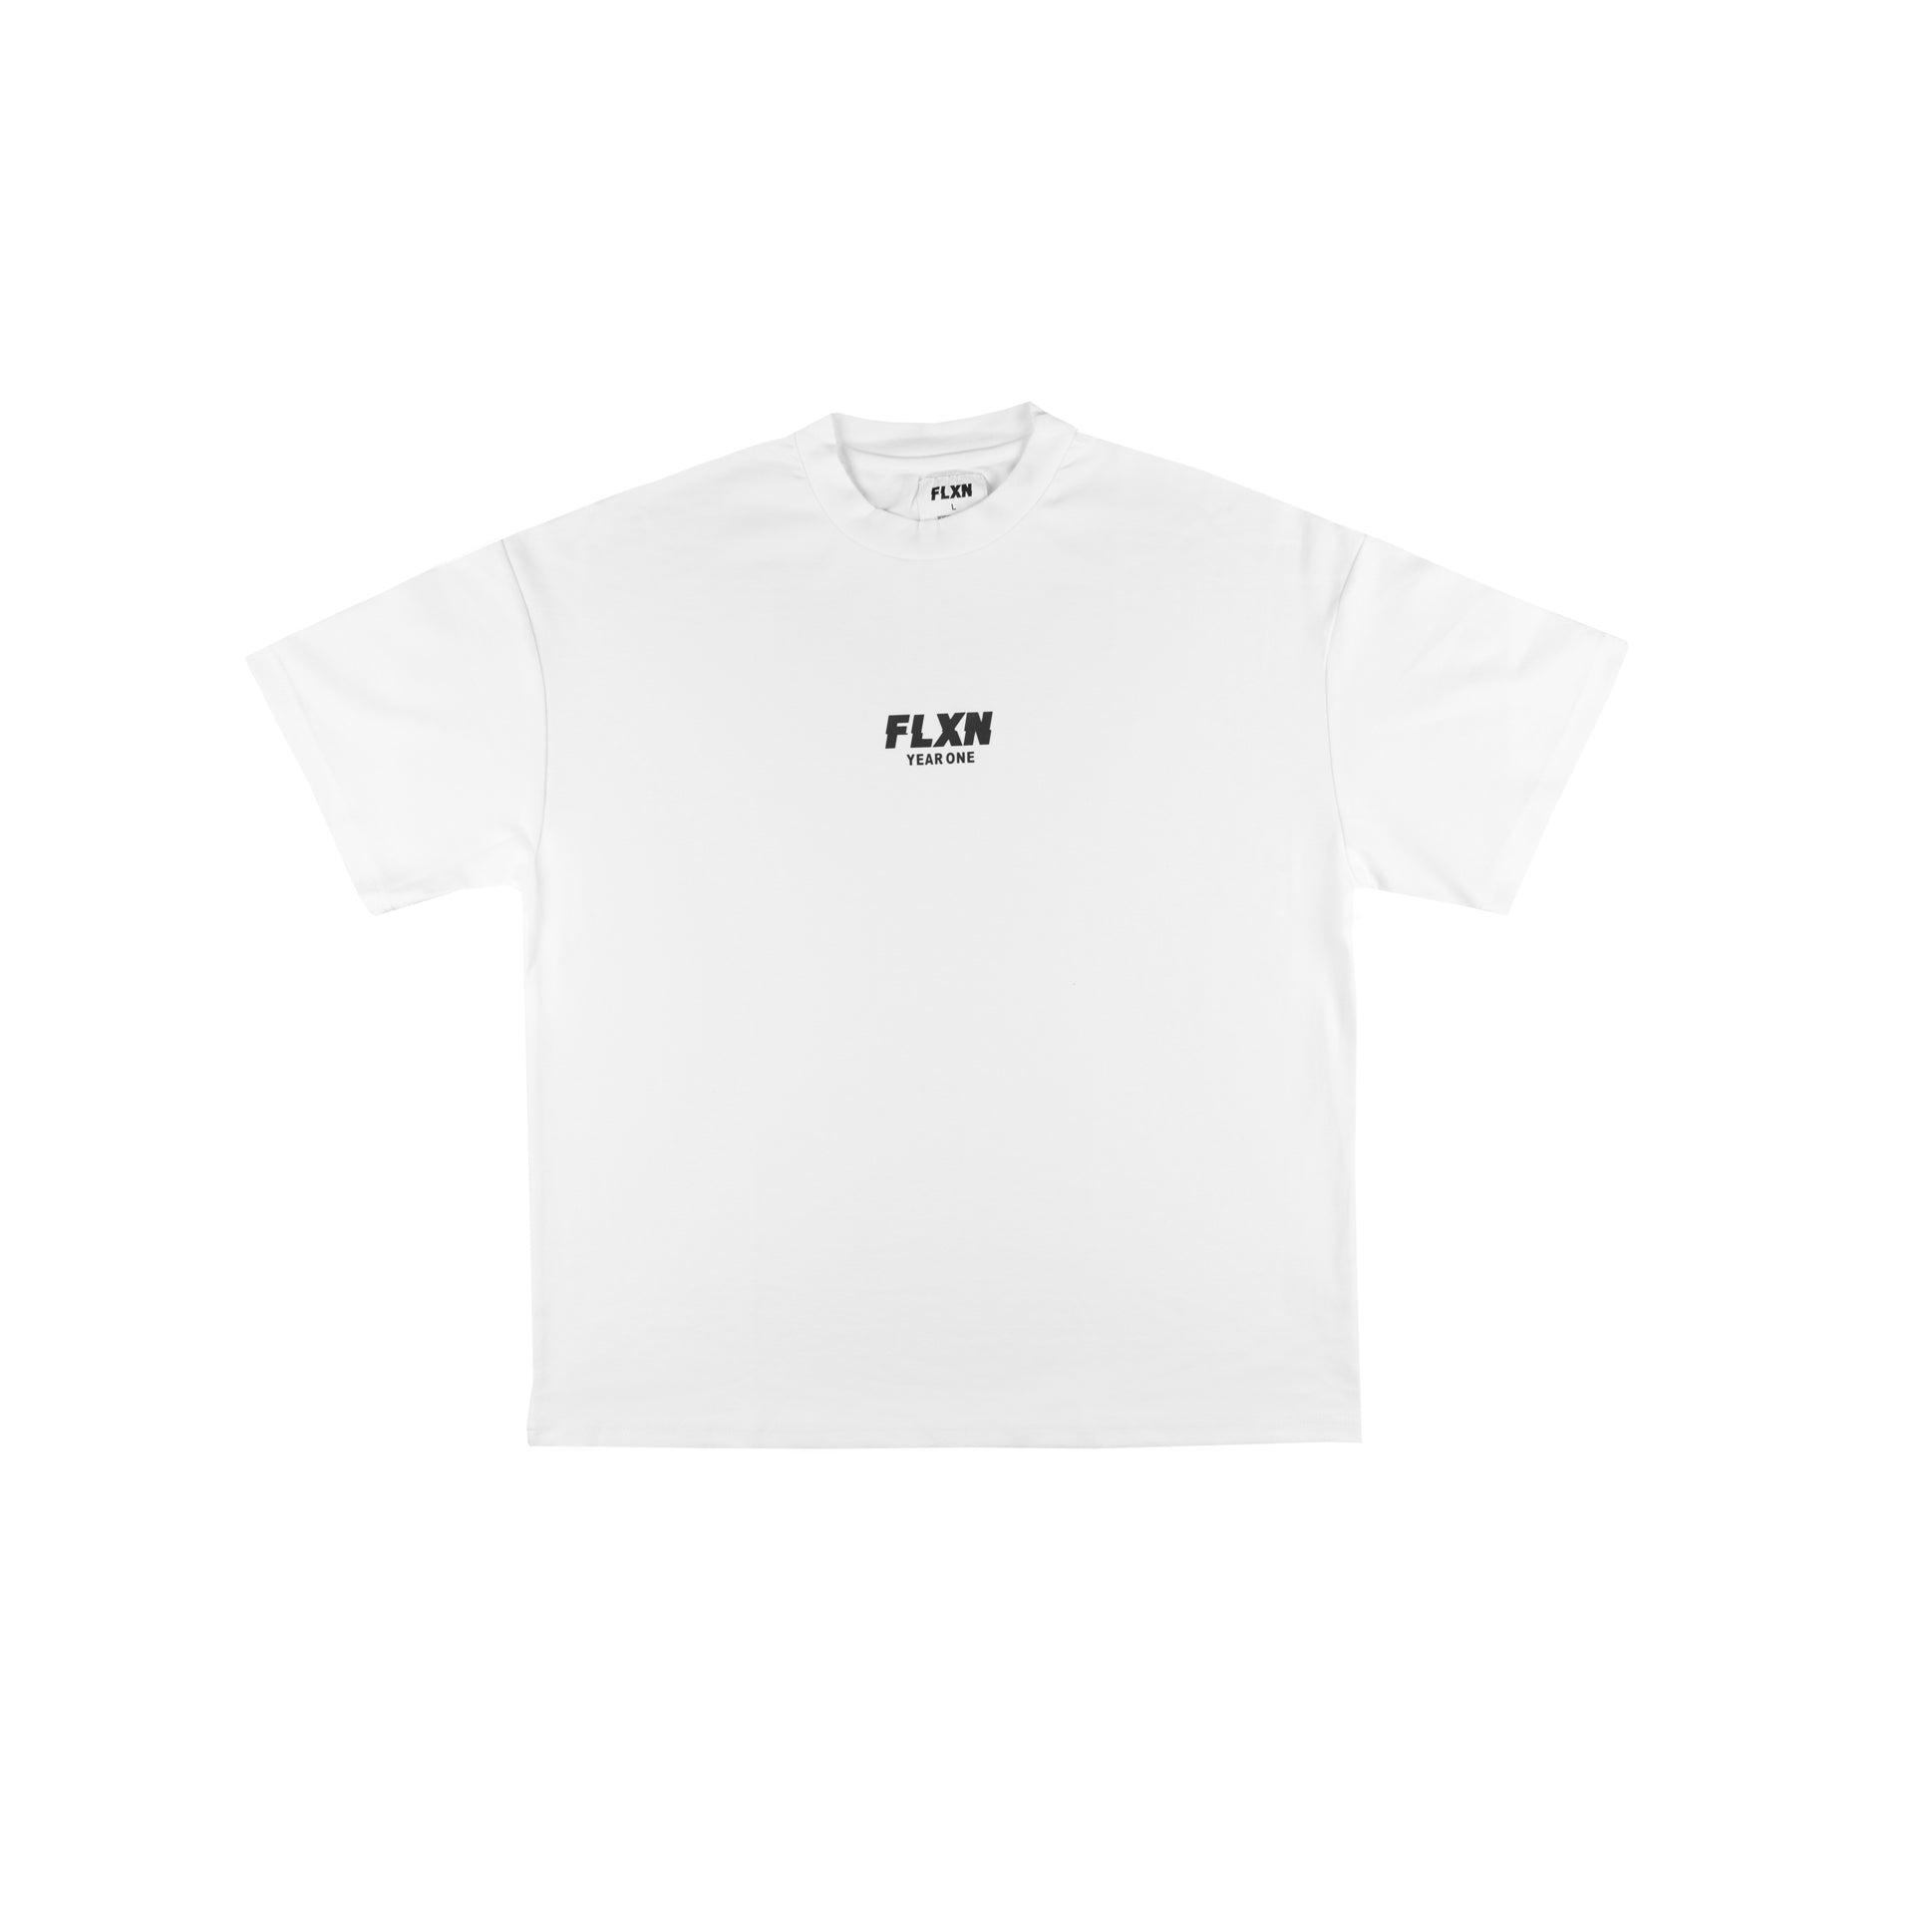 Year One Classic T-Shirt - FLXN